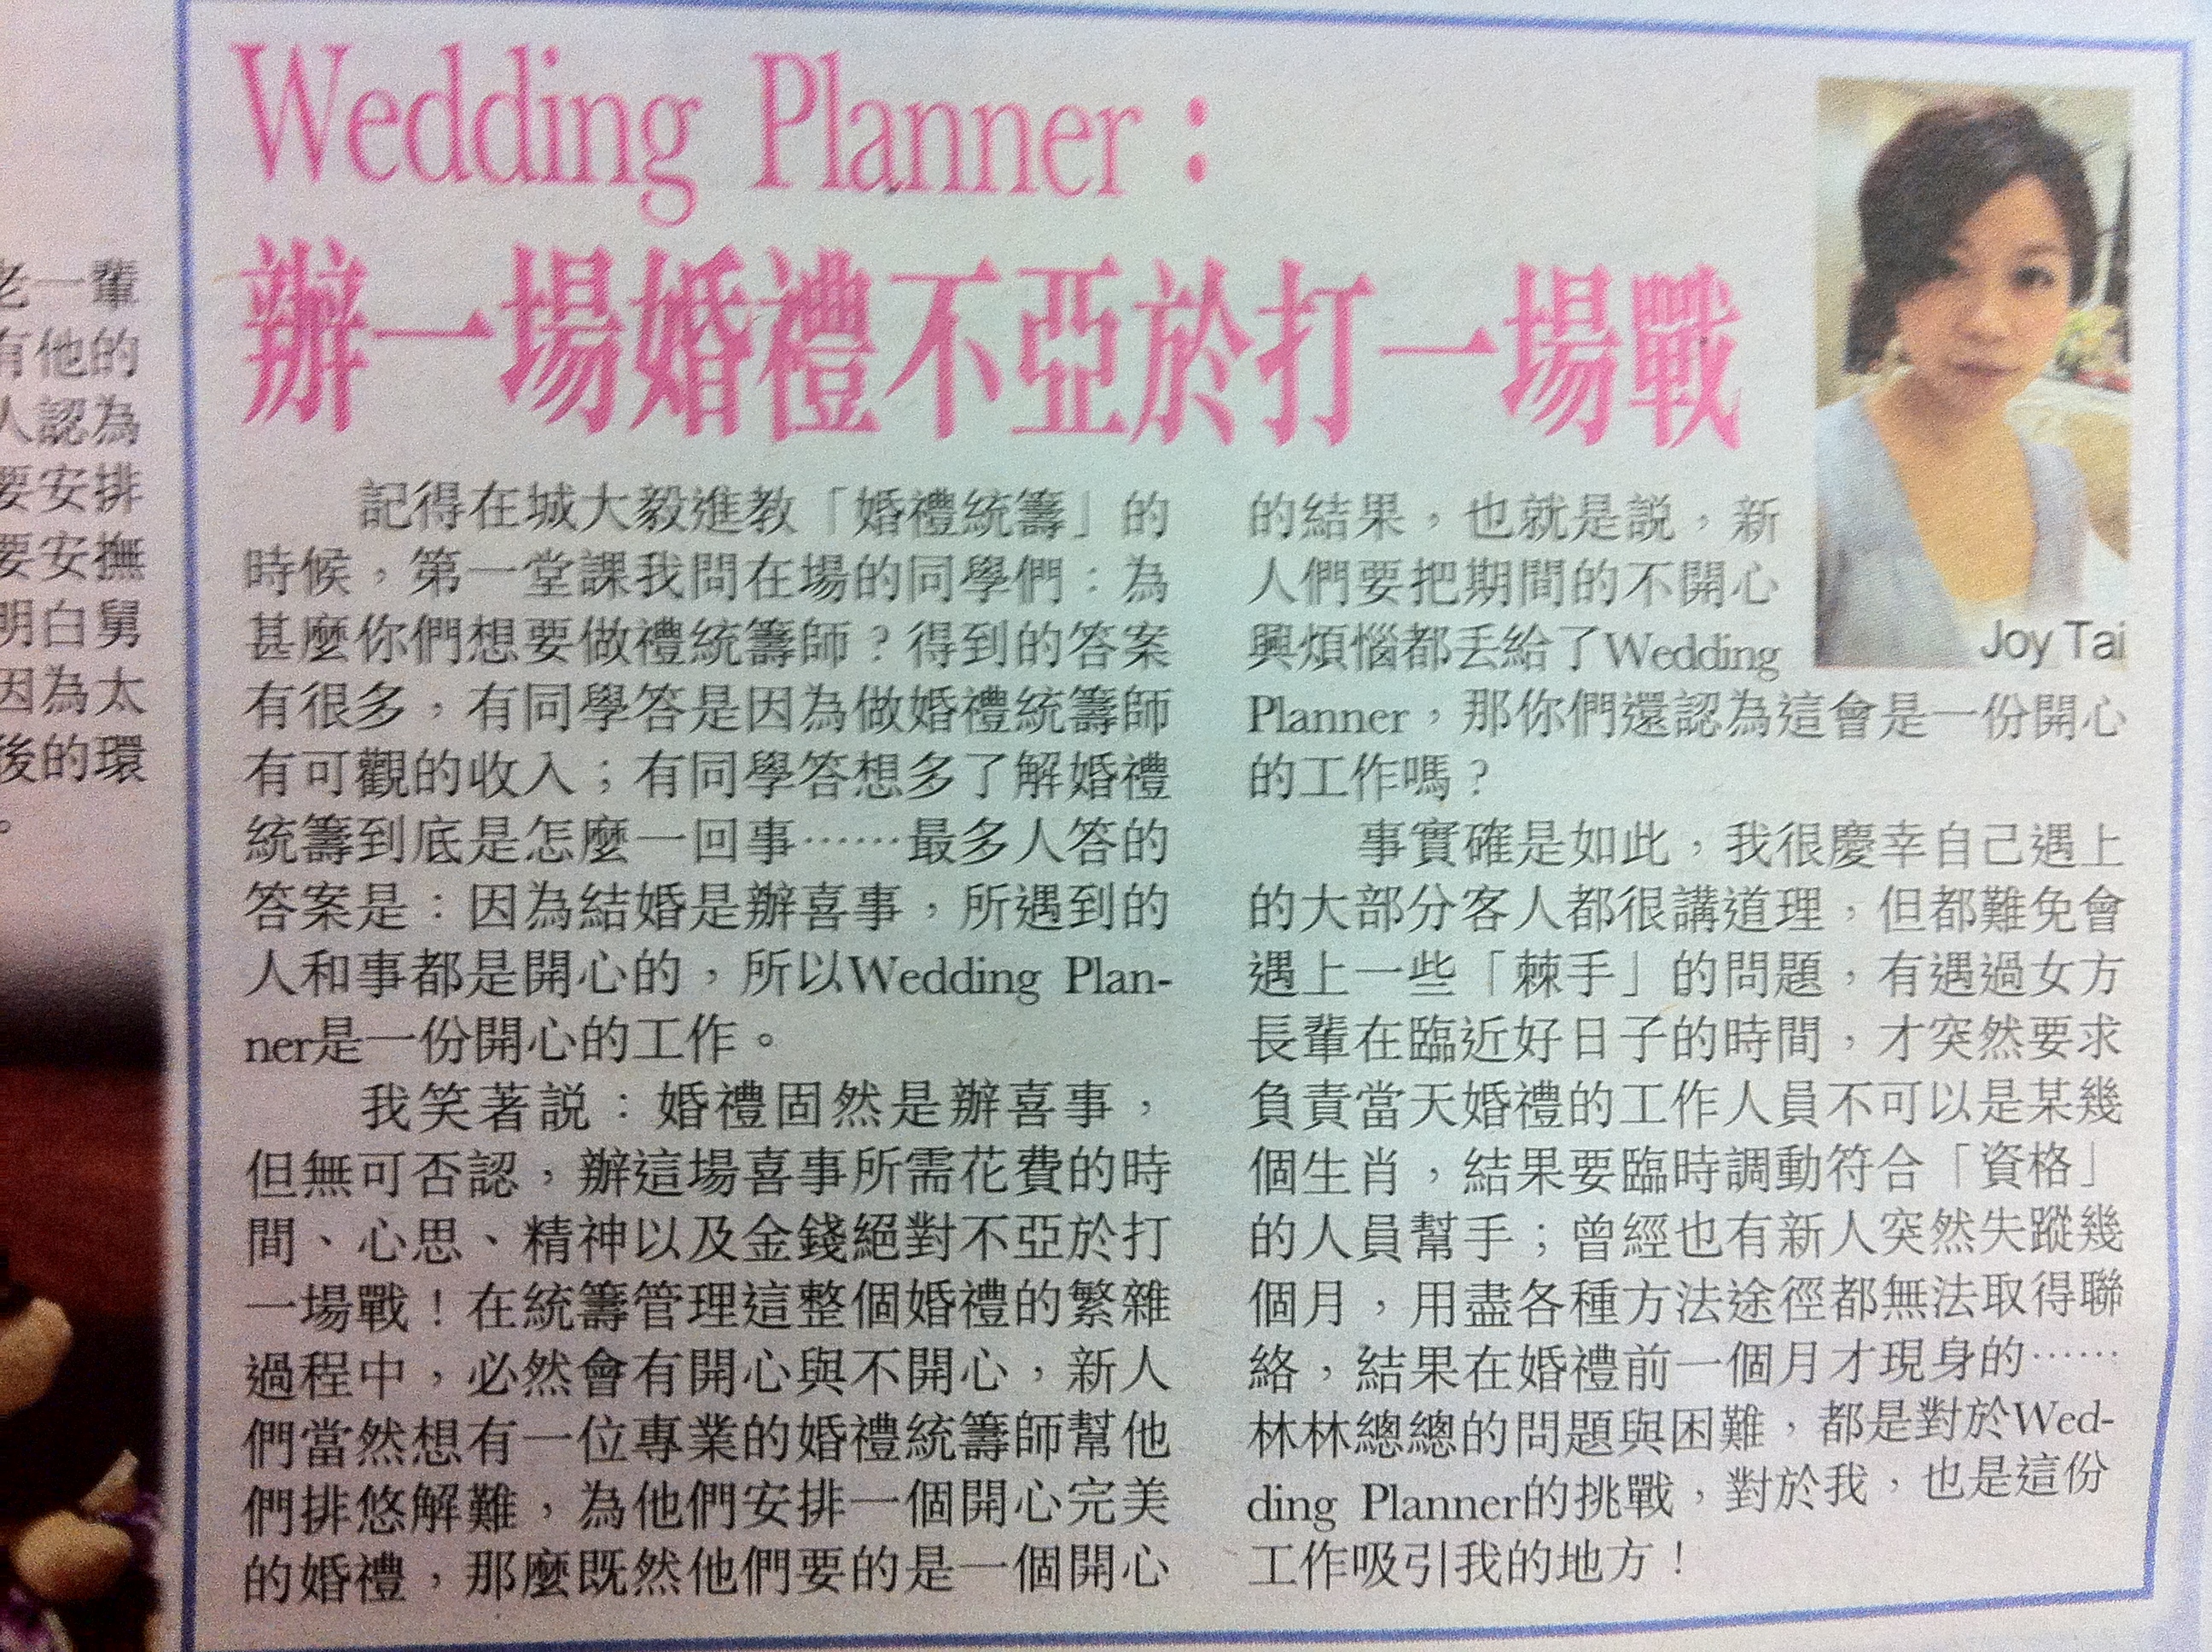 Joy Tai 婚禮統籌師傳媒報導: 新晚報報導